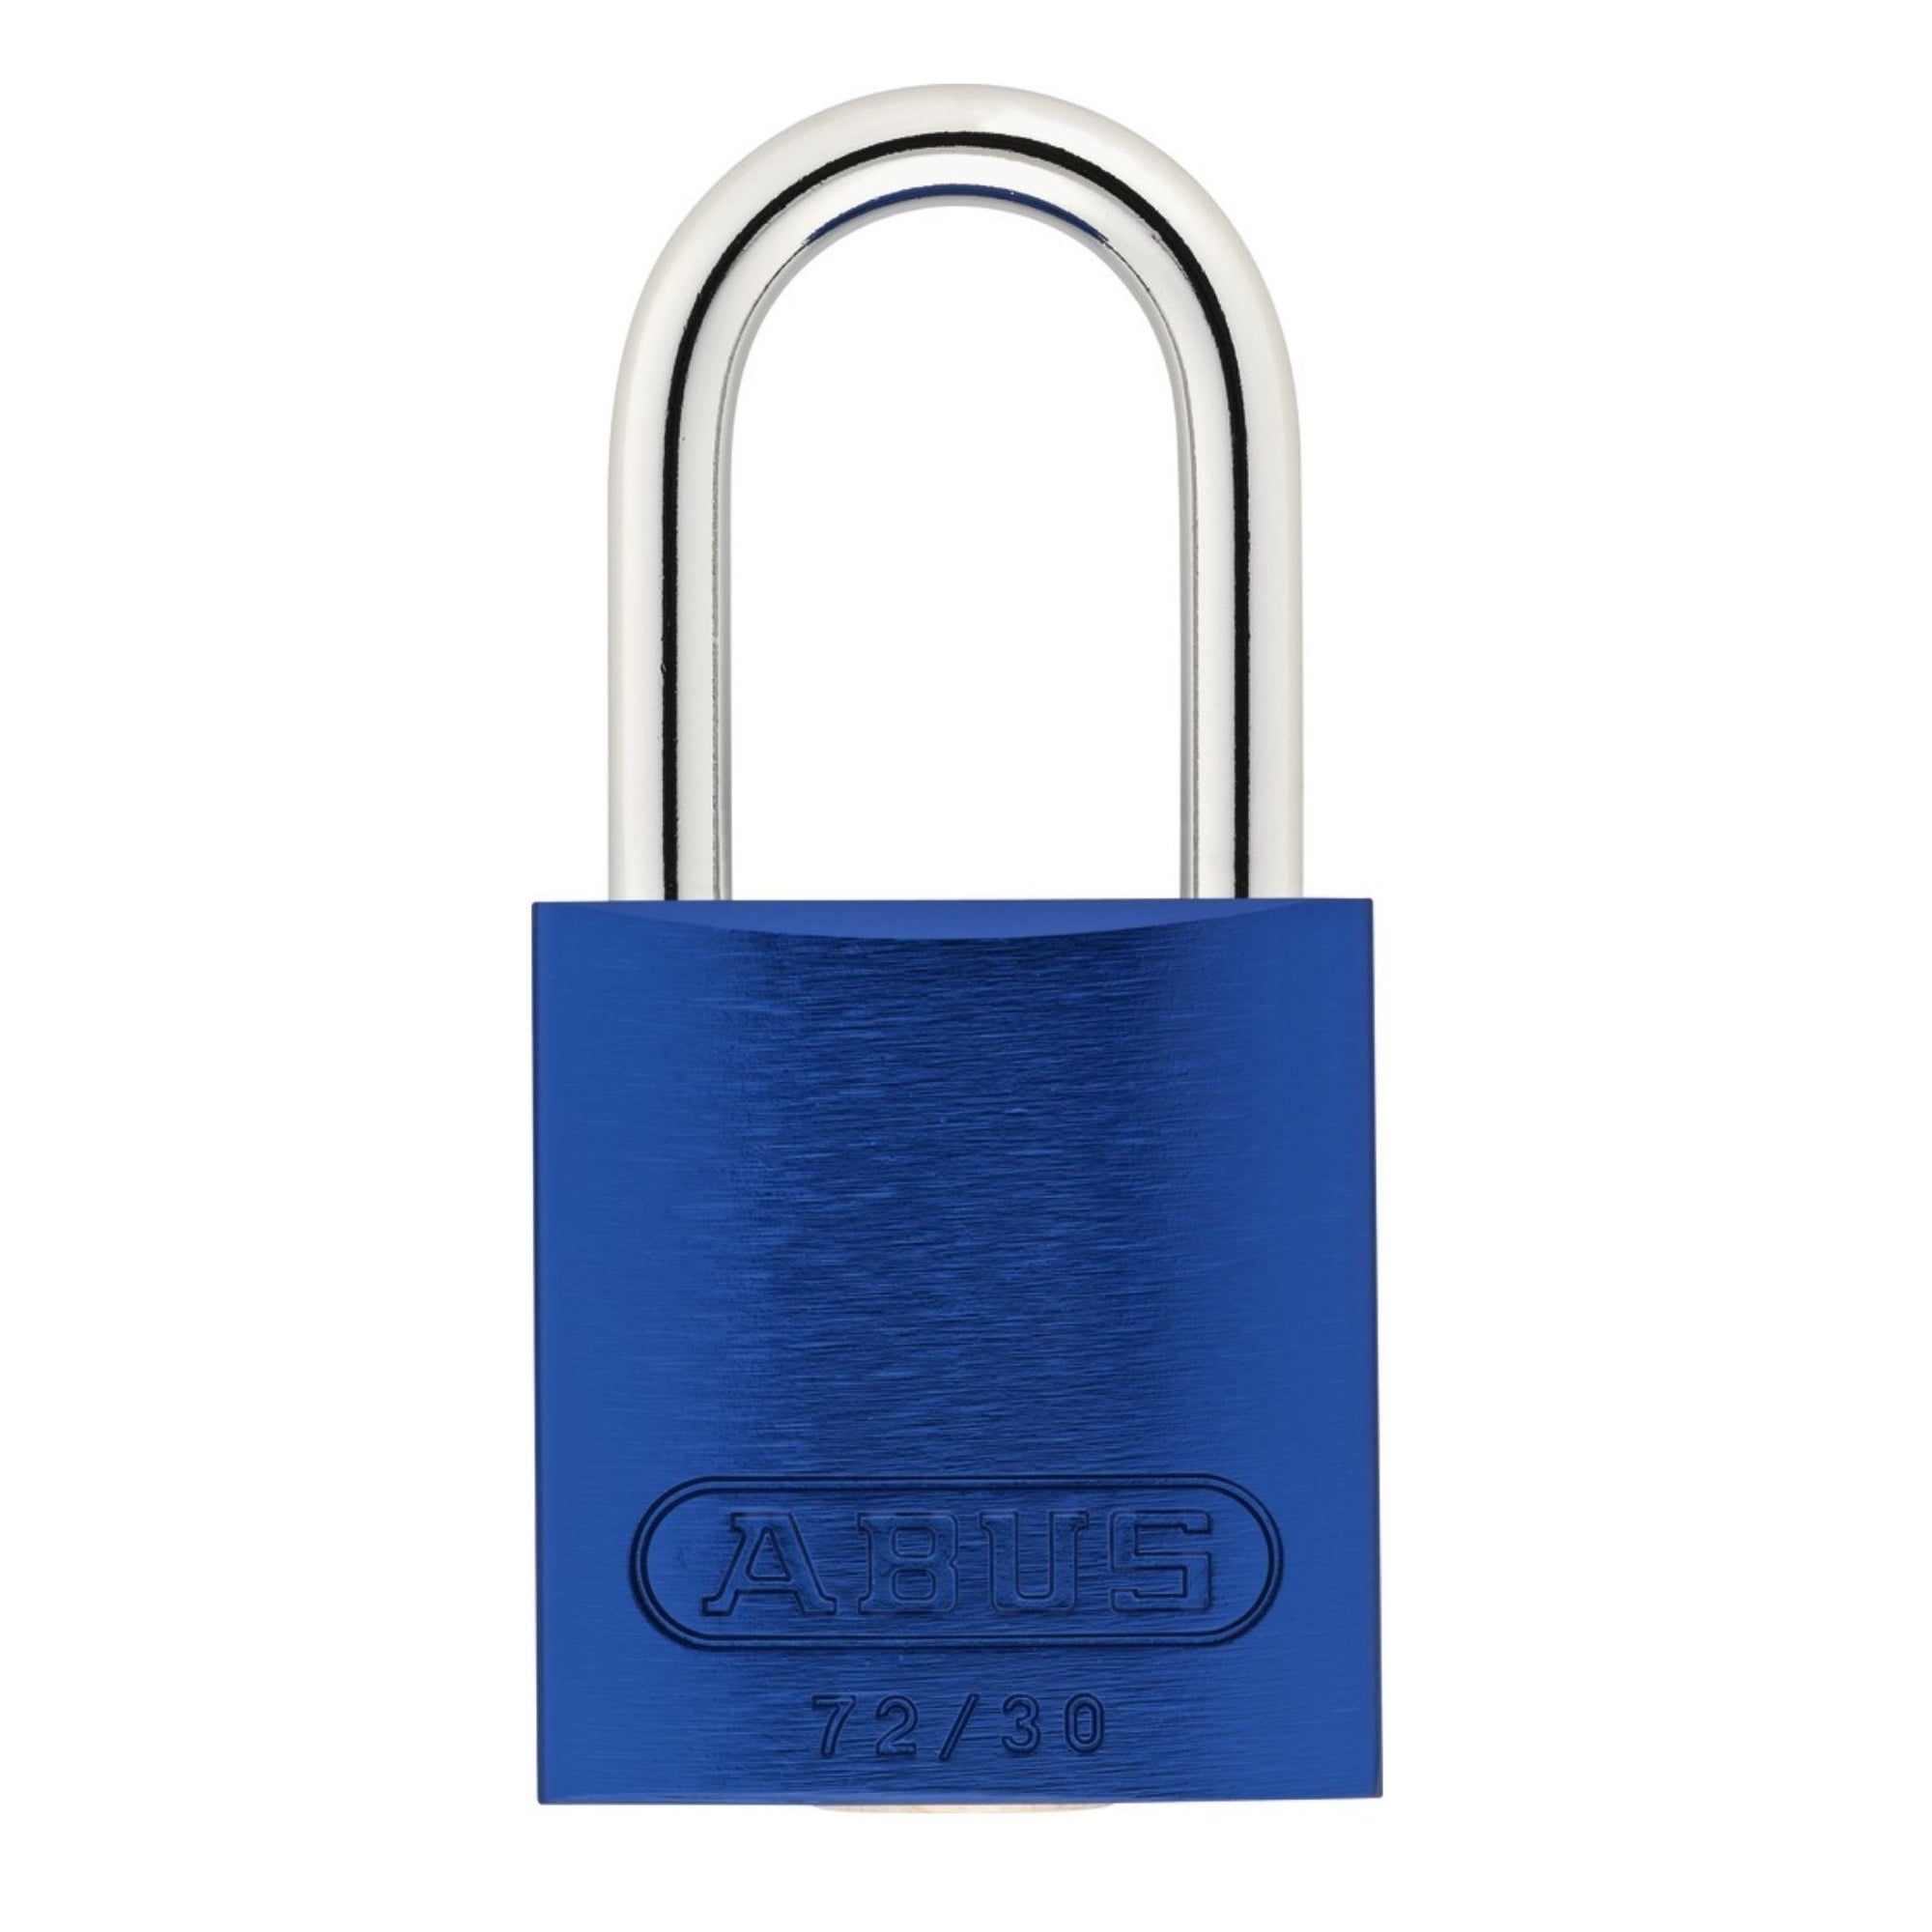 Abus 72/30 KA TT00036 Blue Aluminum Safety Padlock Keyed Alike Lockout Tagout Locks - The Lock Source